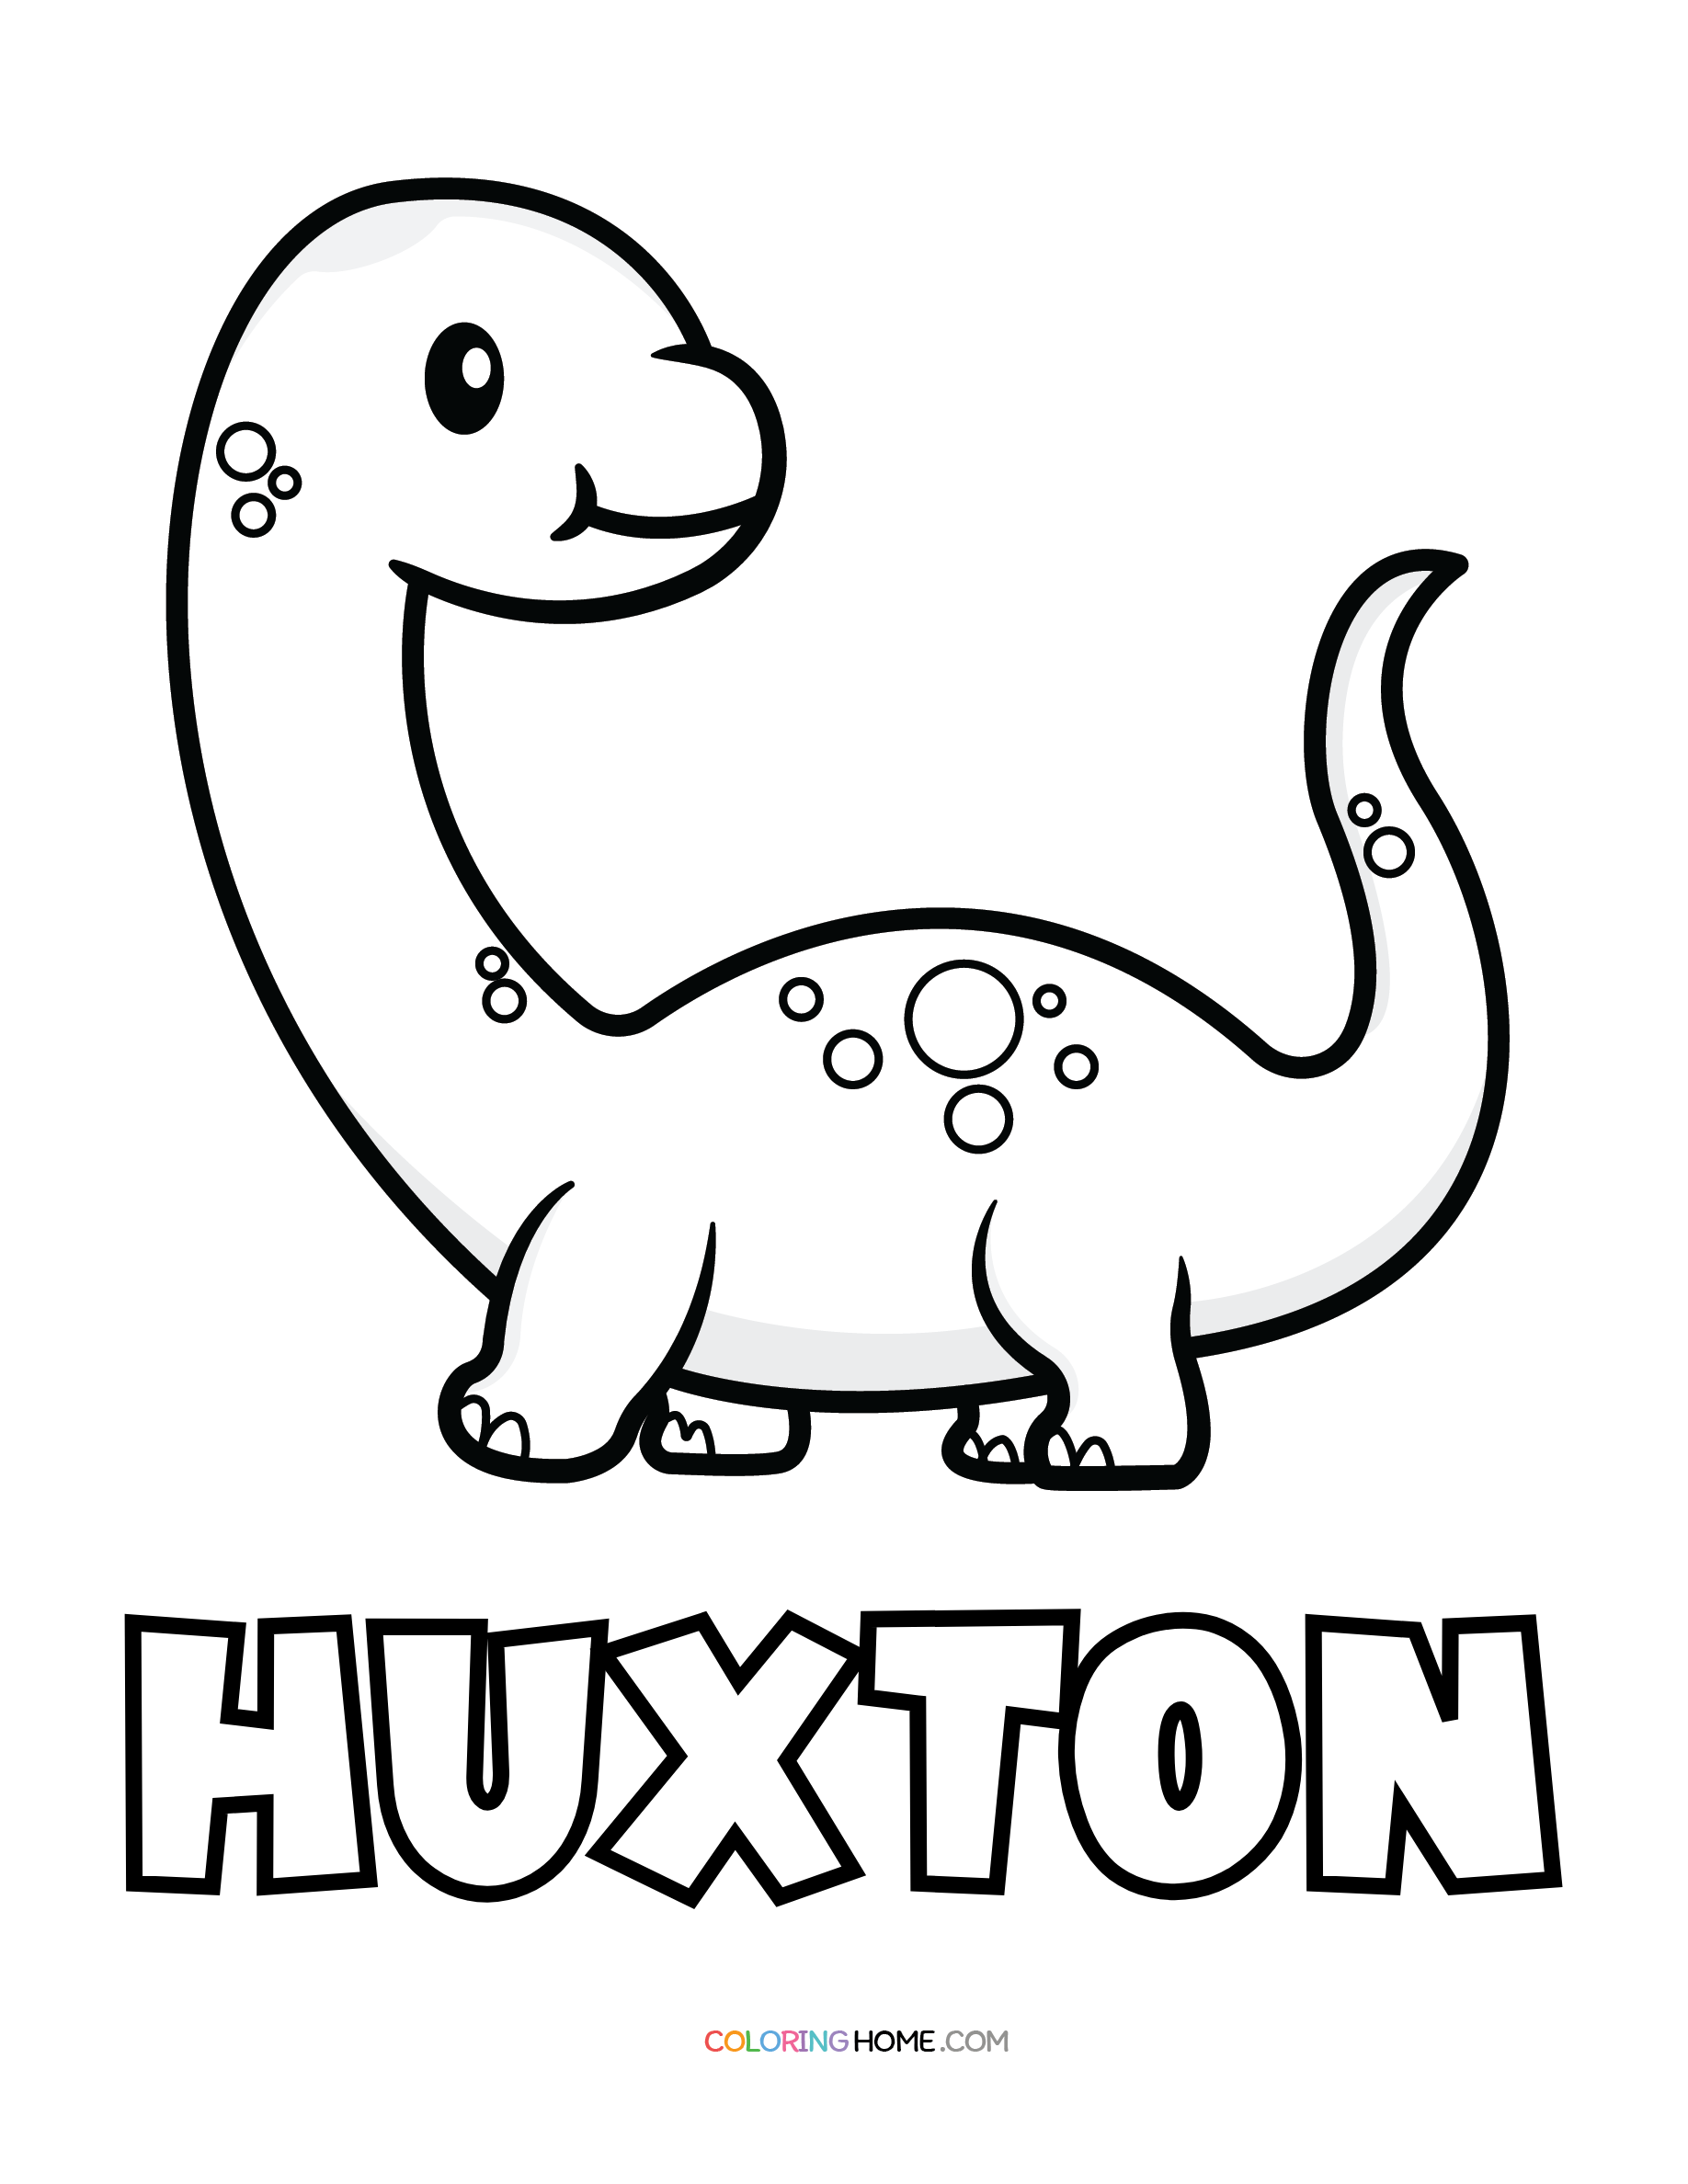 Huxton dinosaur coloring page